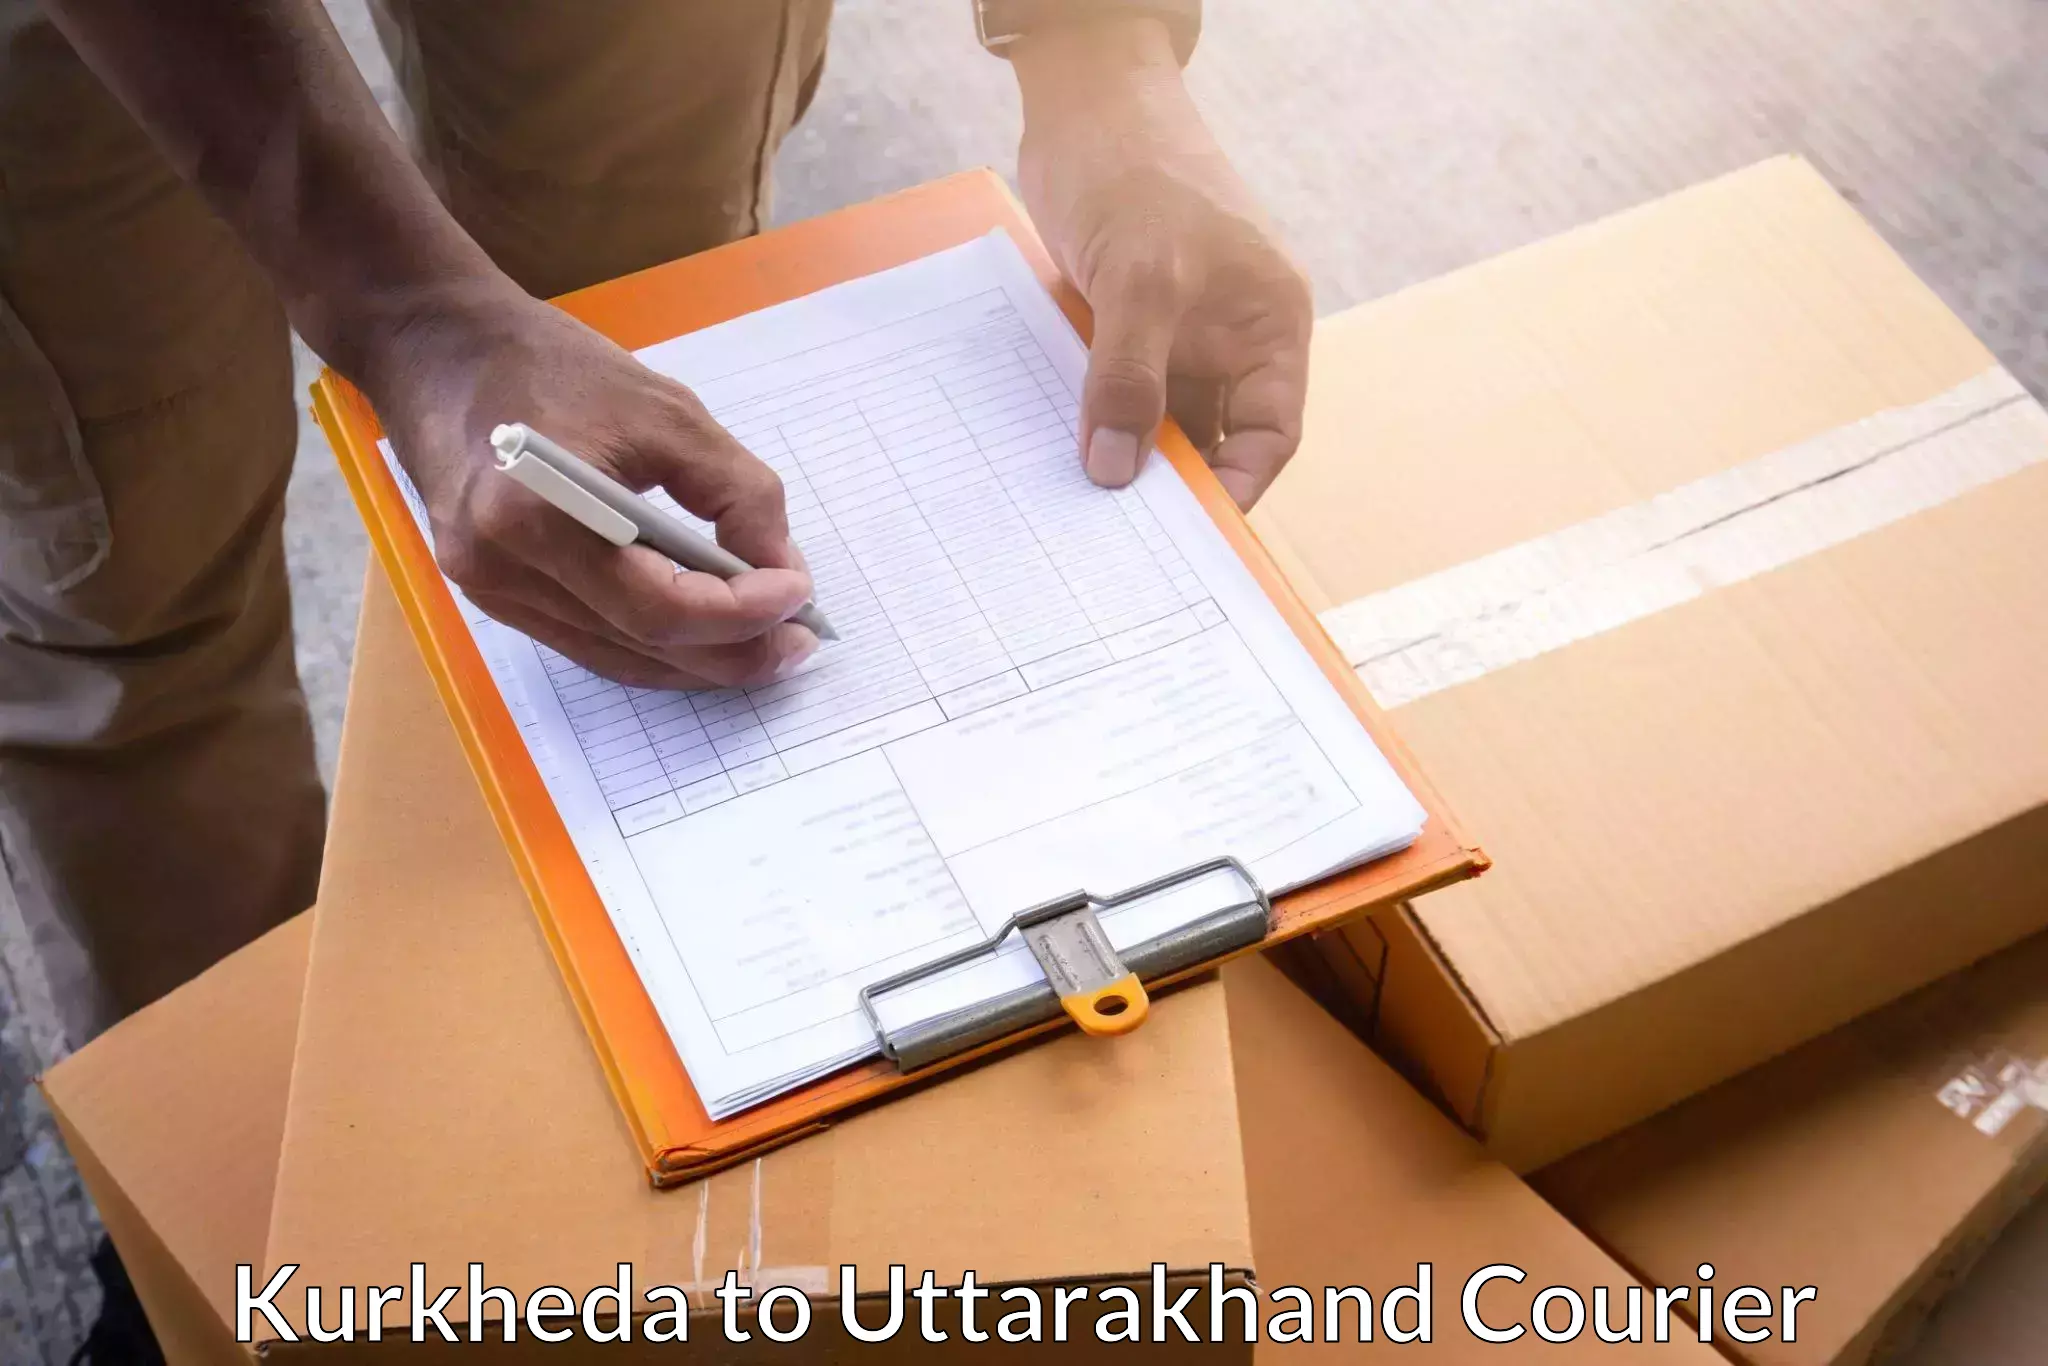 Cargo delivery service Kurkheda to Dehradun